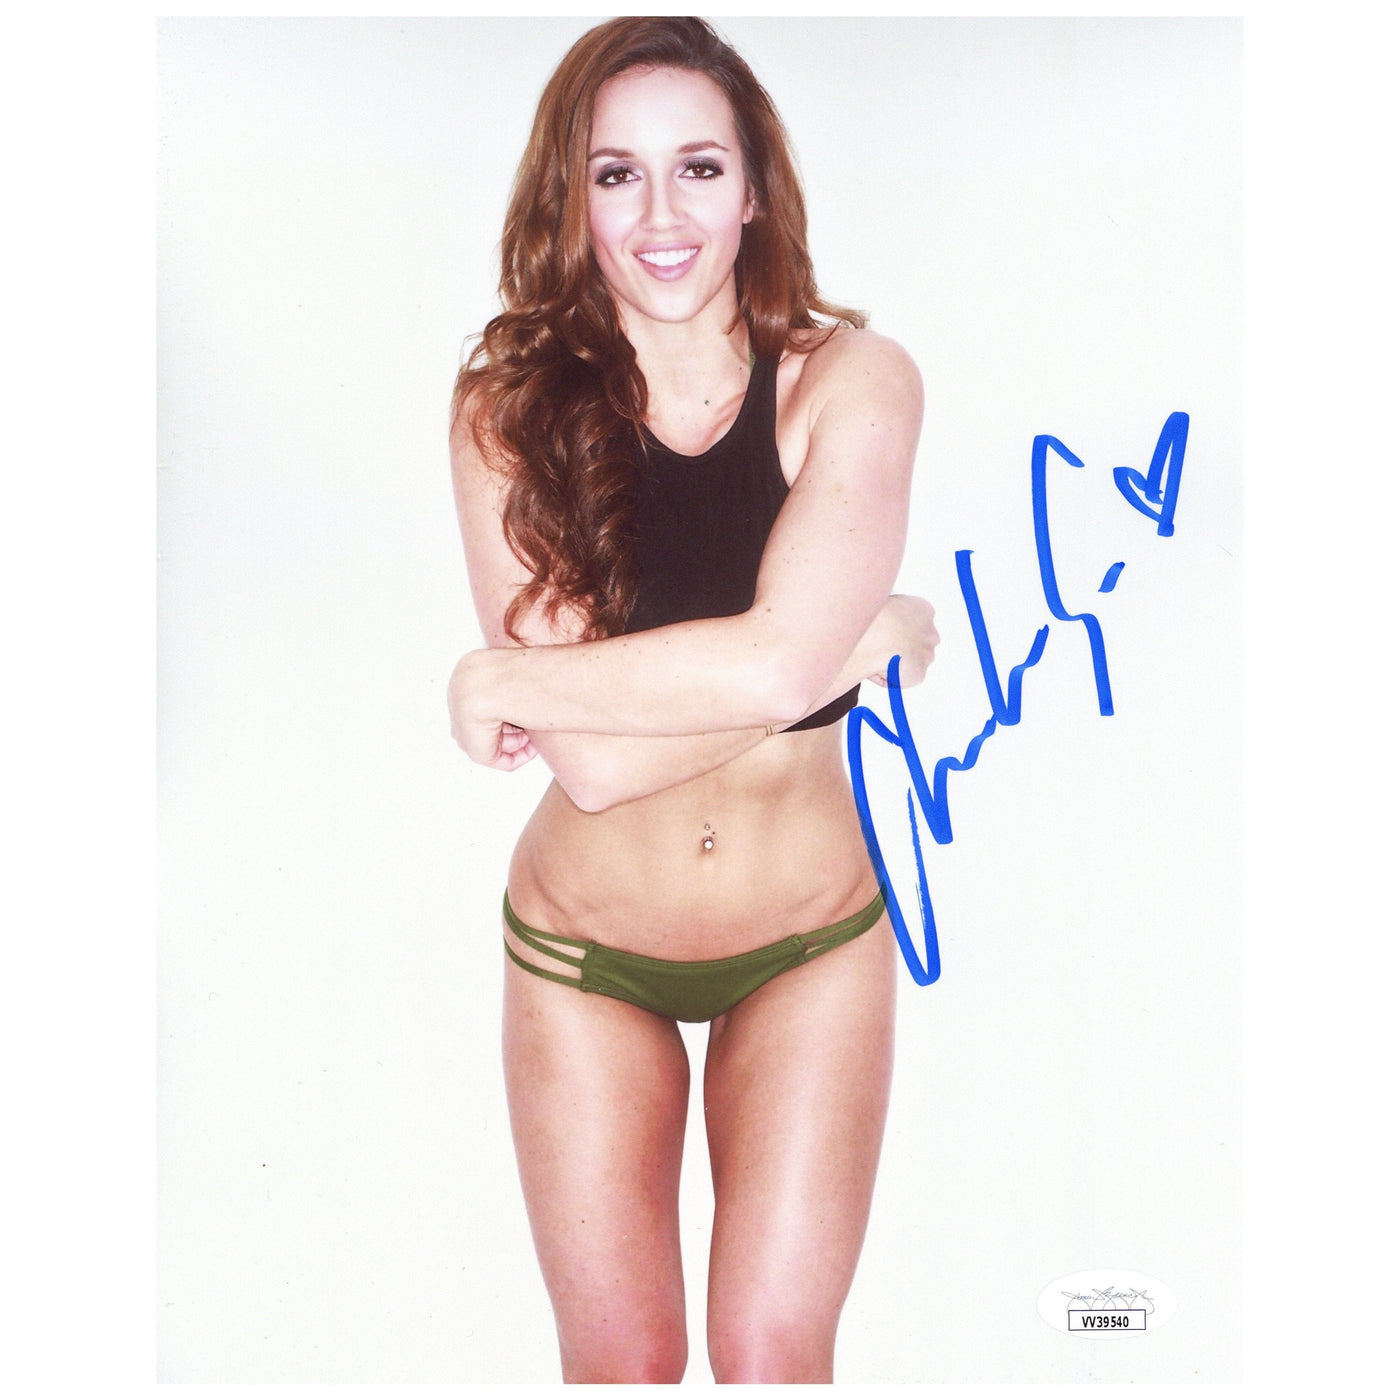 Chelsea Green Signed 8x10 Photo Wrestling Autographed JSA COA 4